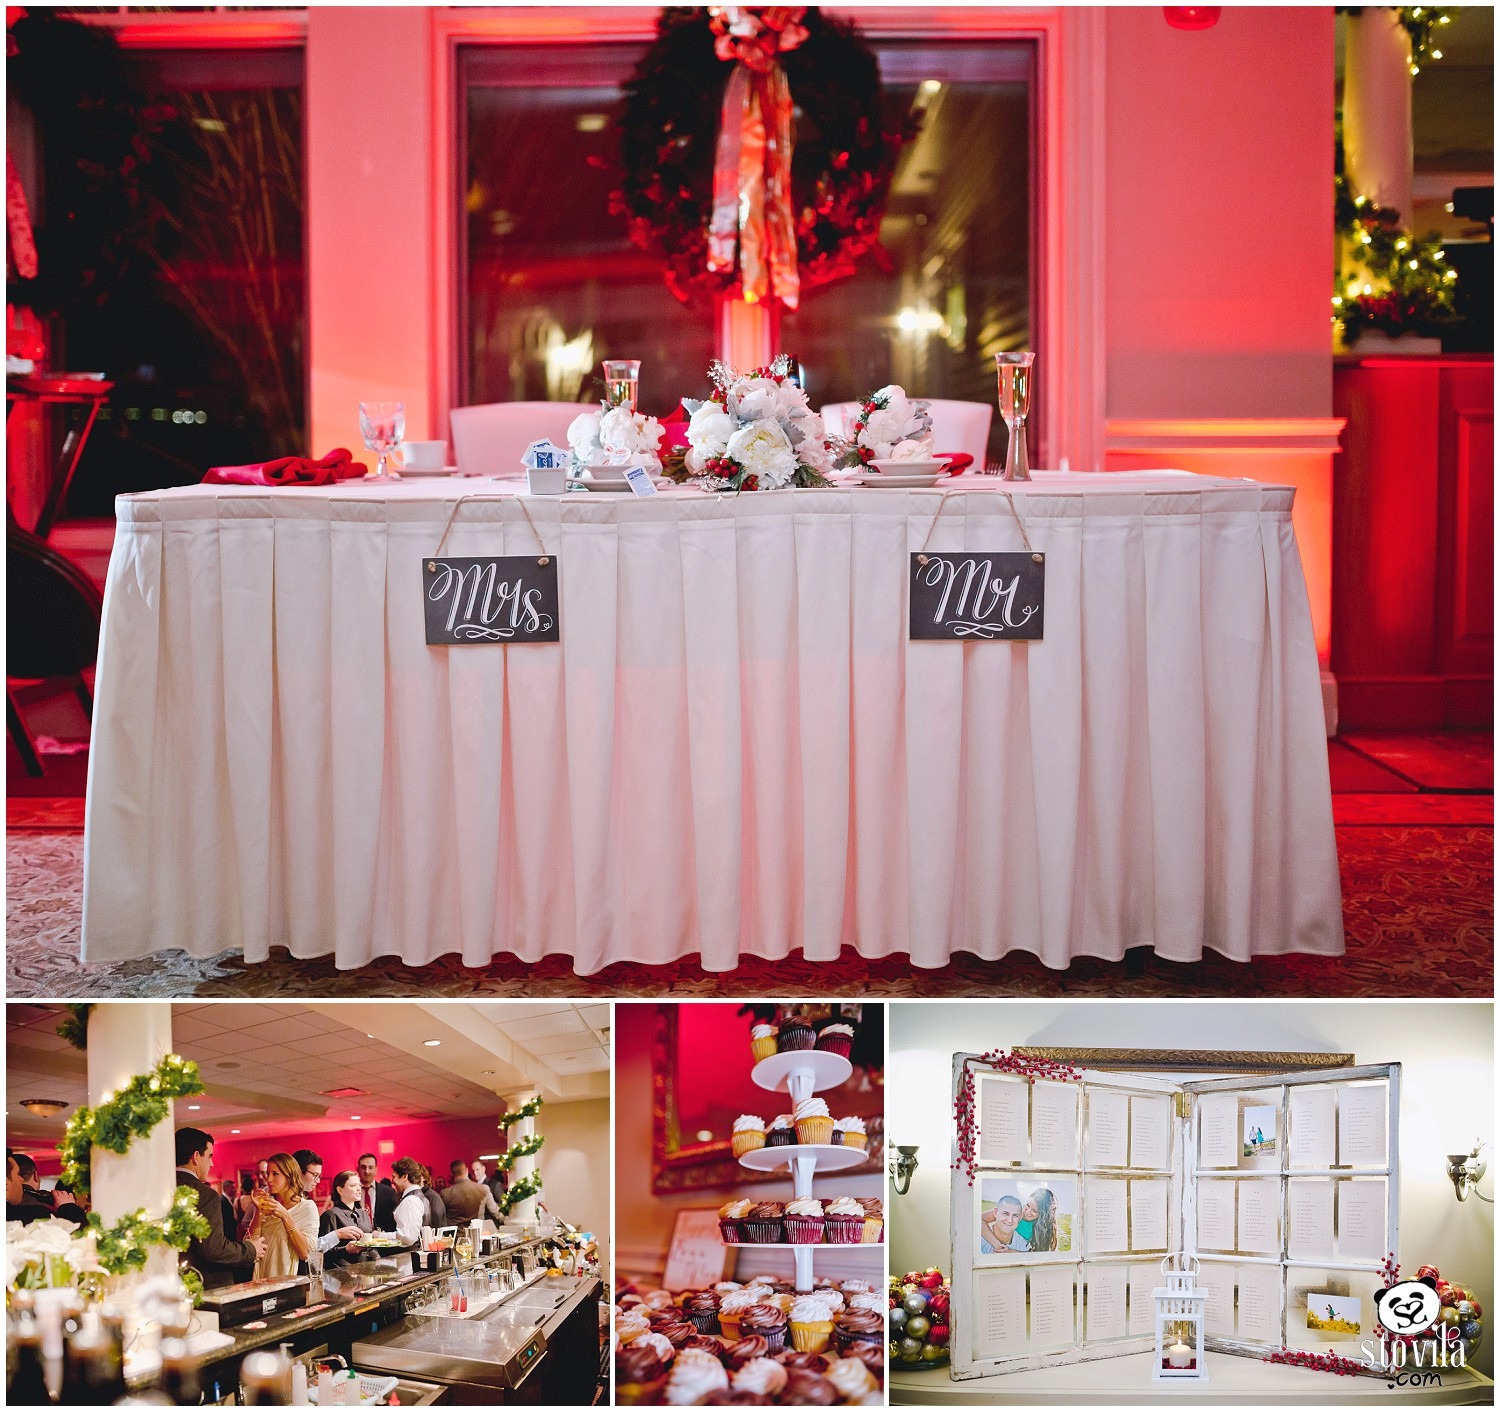 KB_Tirrell Room Wedding, Boston - Gate of Heaven Church - STOVILA Photography (27)